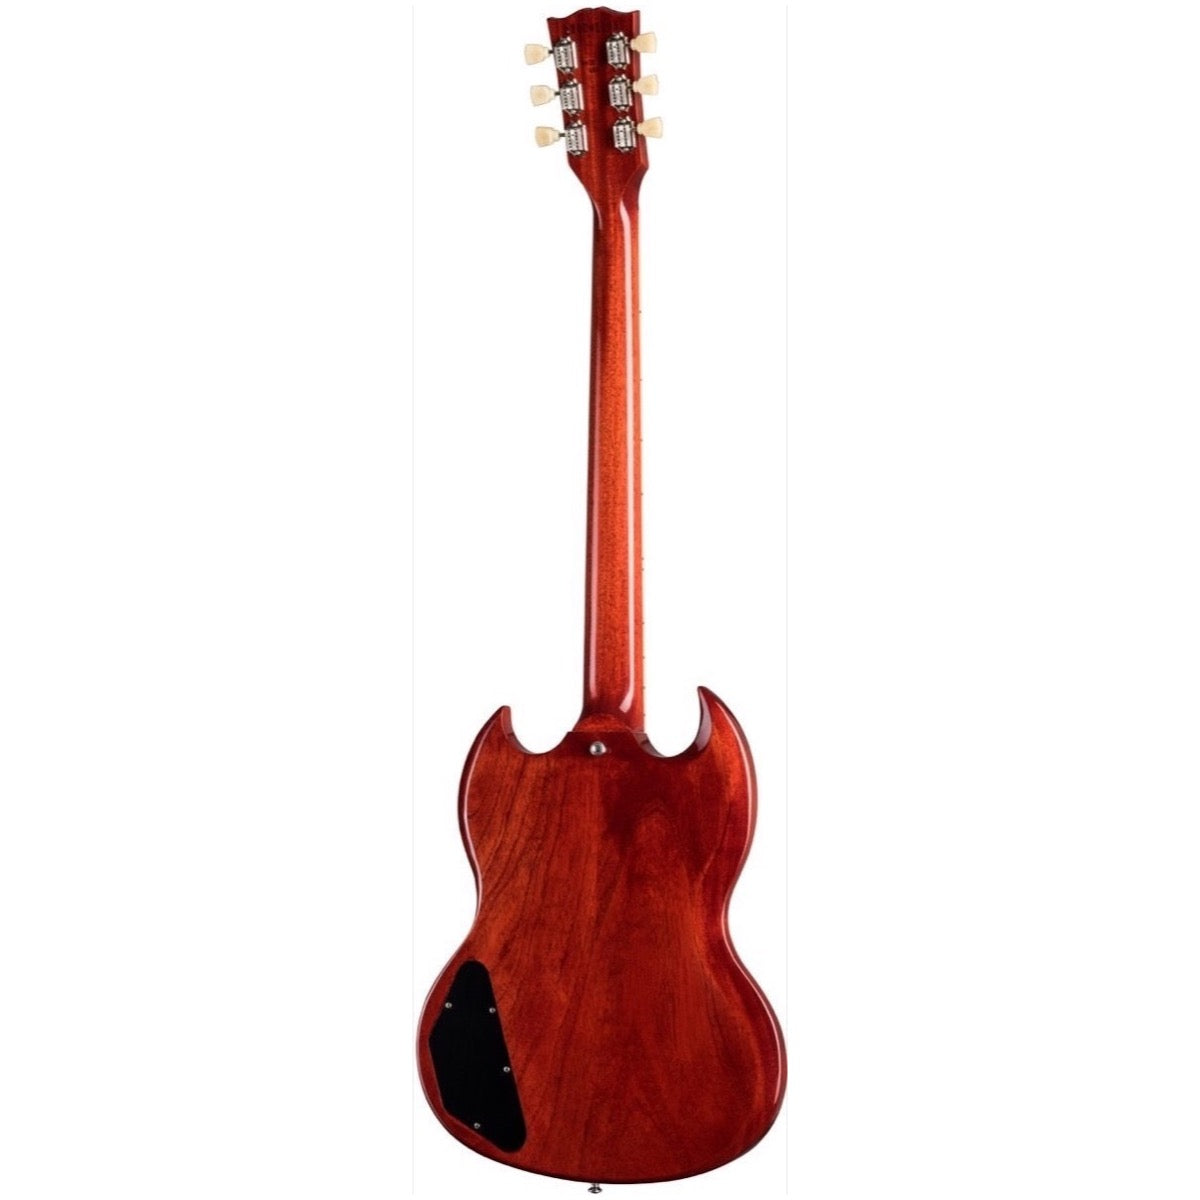 Gibson SG Standard '61 Sideways Vibrola Electric Guitar, Vintage Cherry